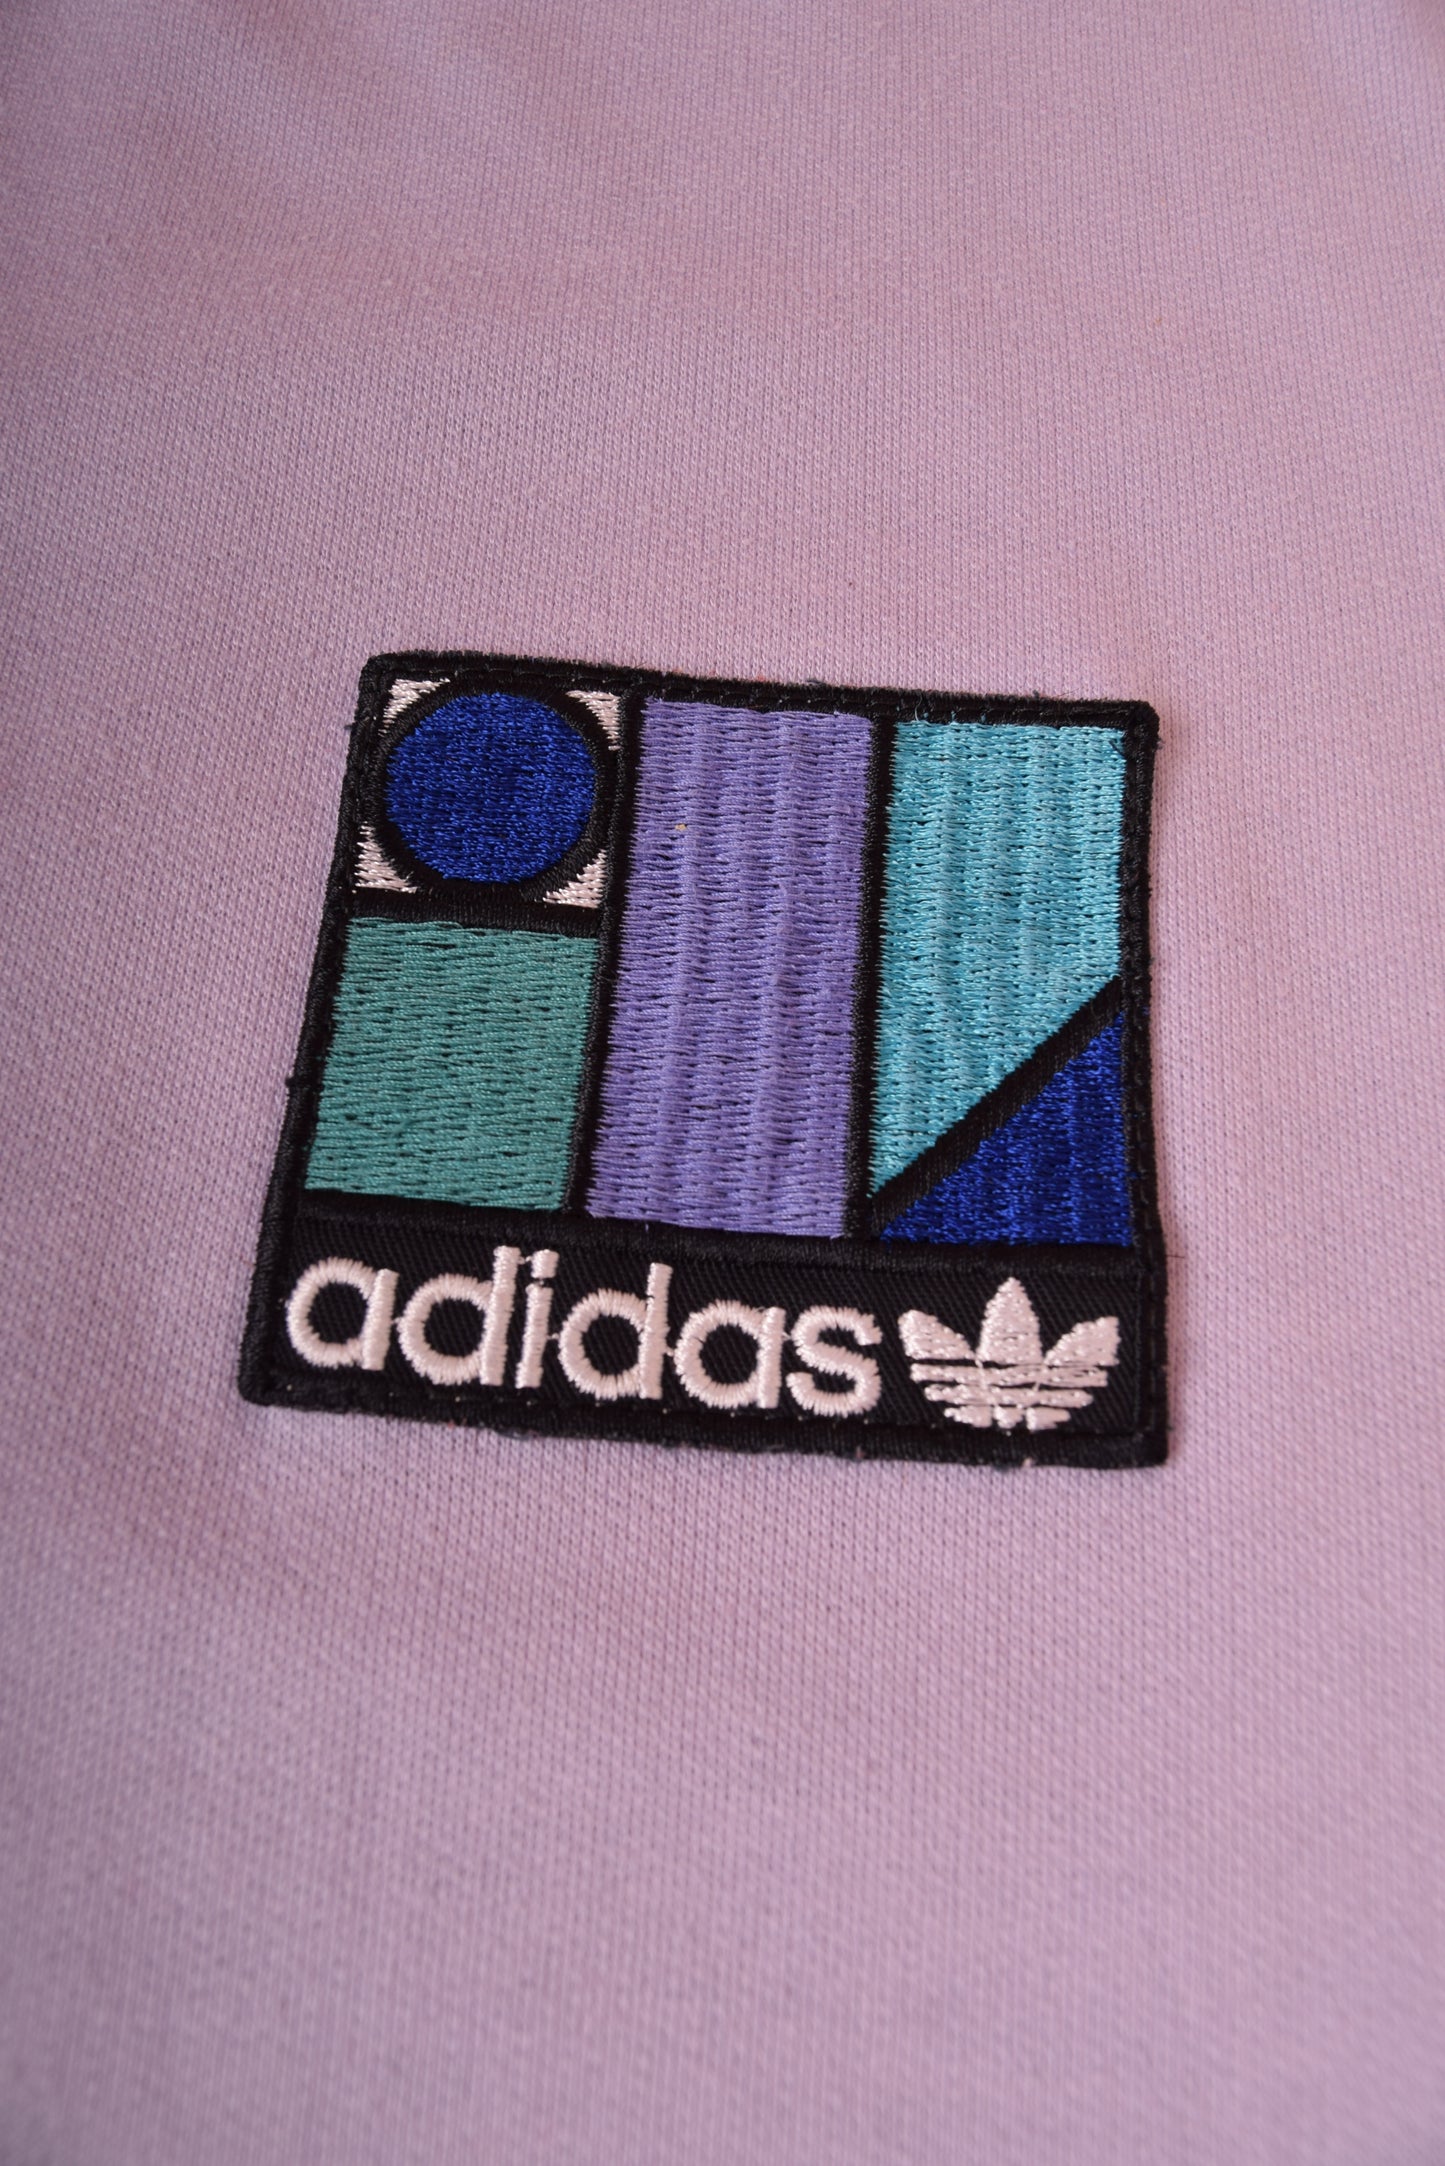 Vintage 80's Adidas Ivan Lendl Sweatshirt Made in Yugoslavia Size XL